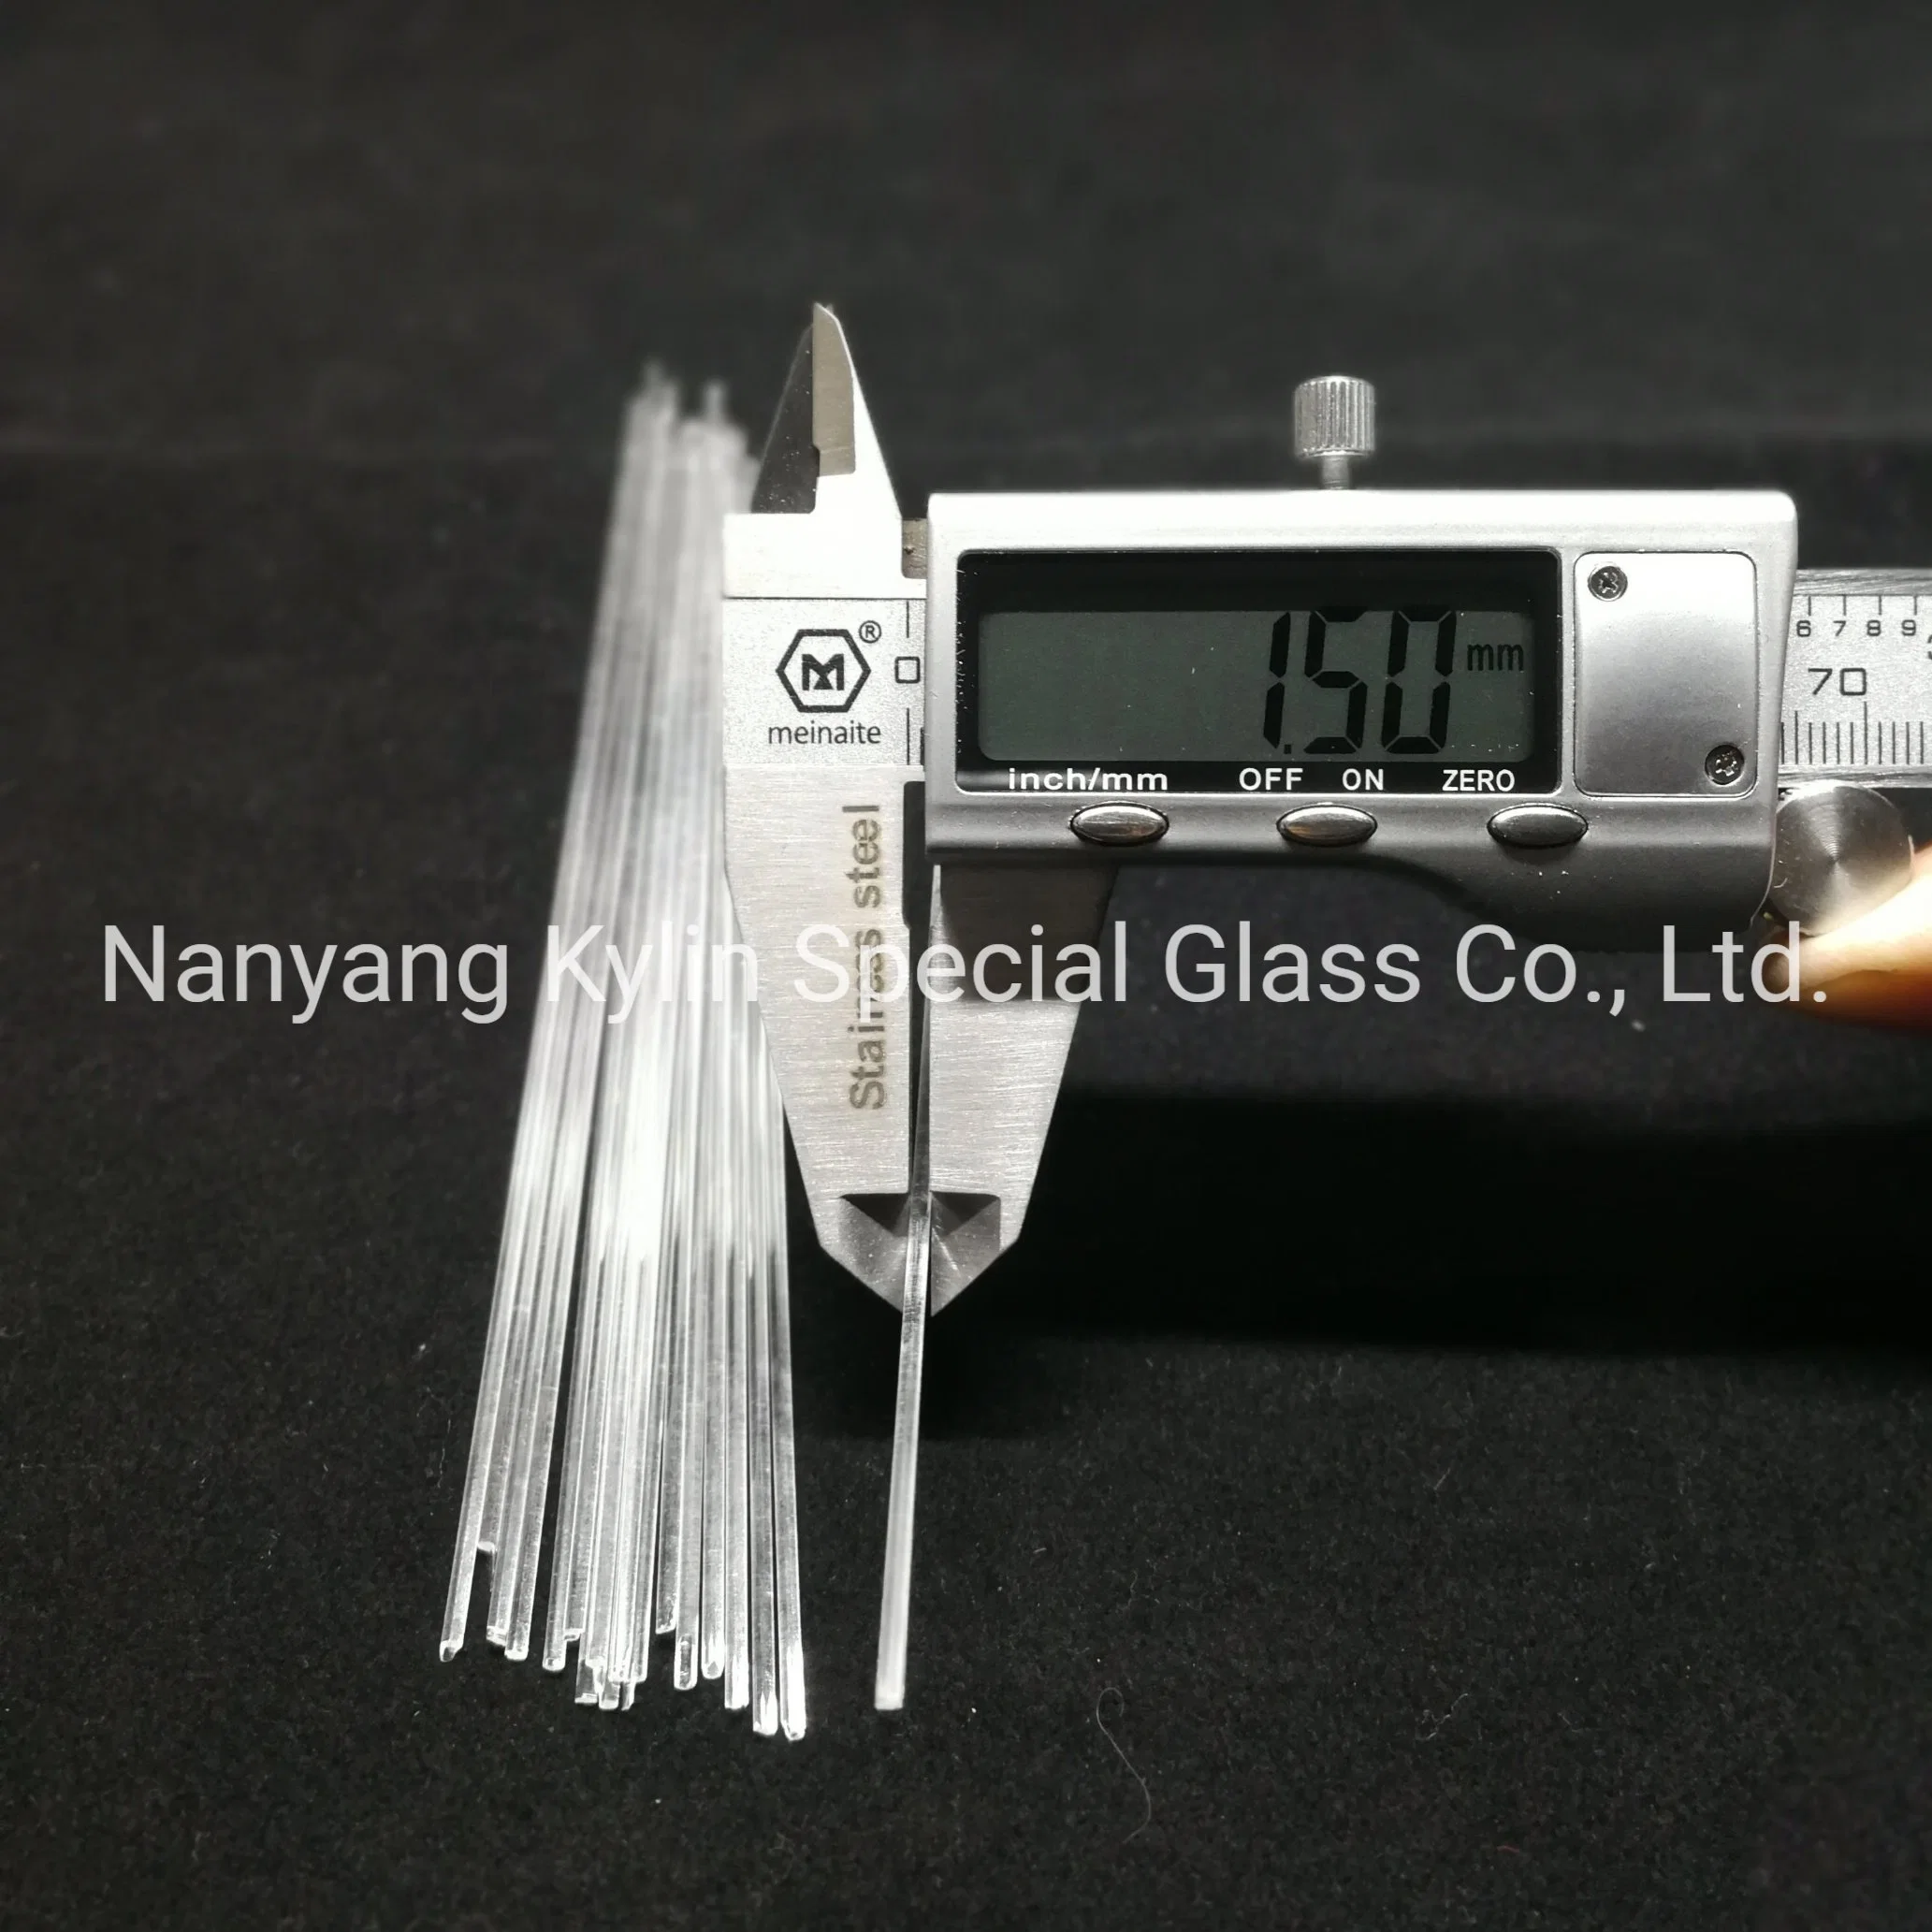 Customized Hot Selling Heat Resistance Optical Transparent Quartz Glass Rod